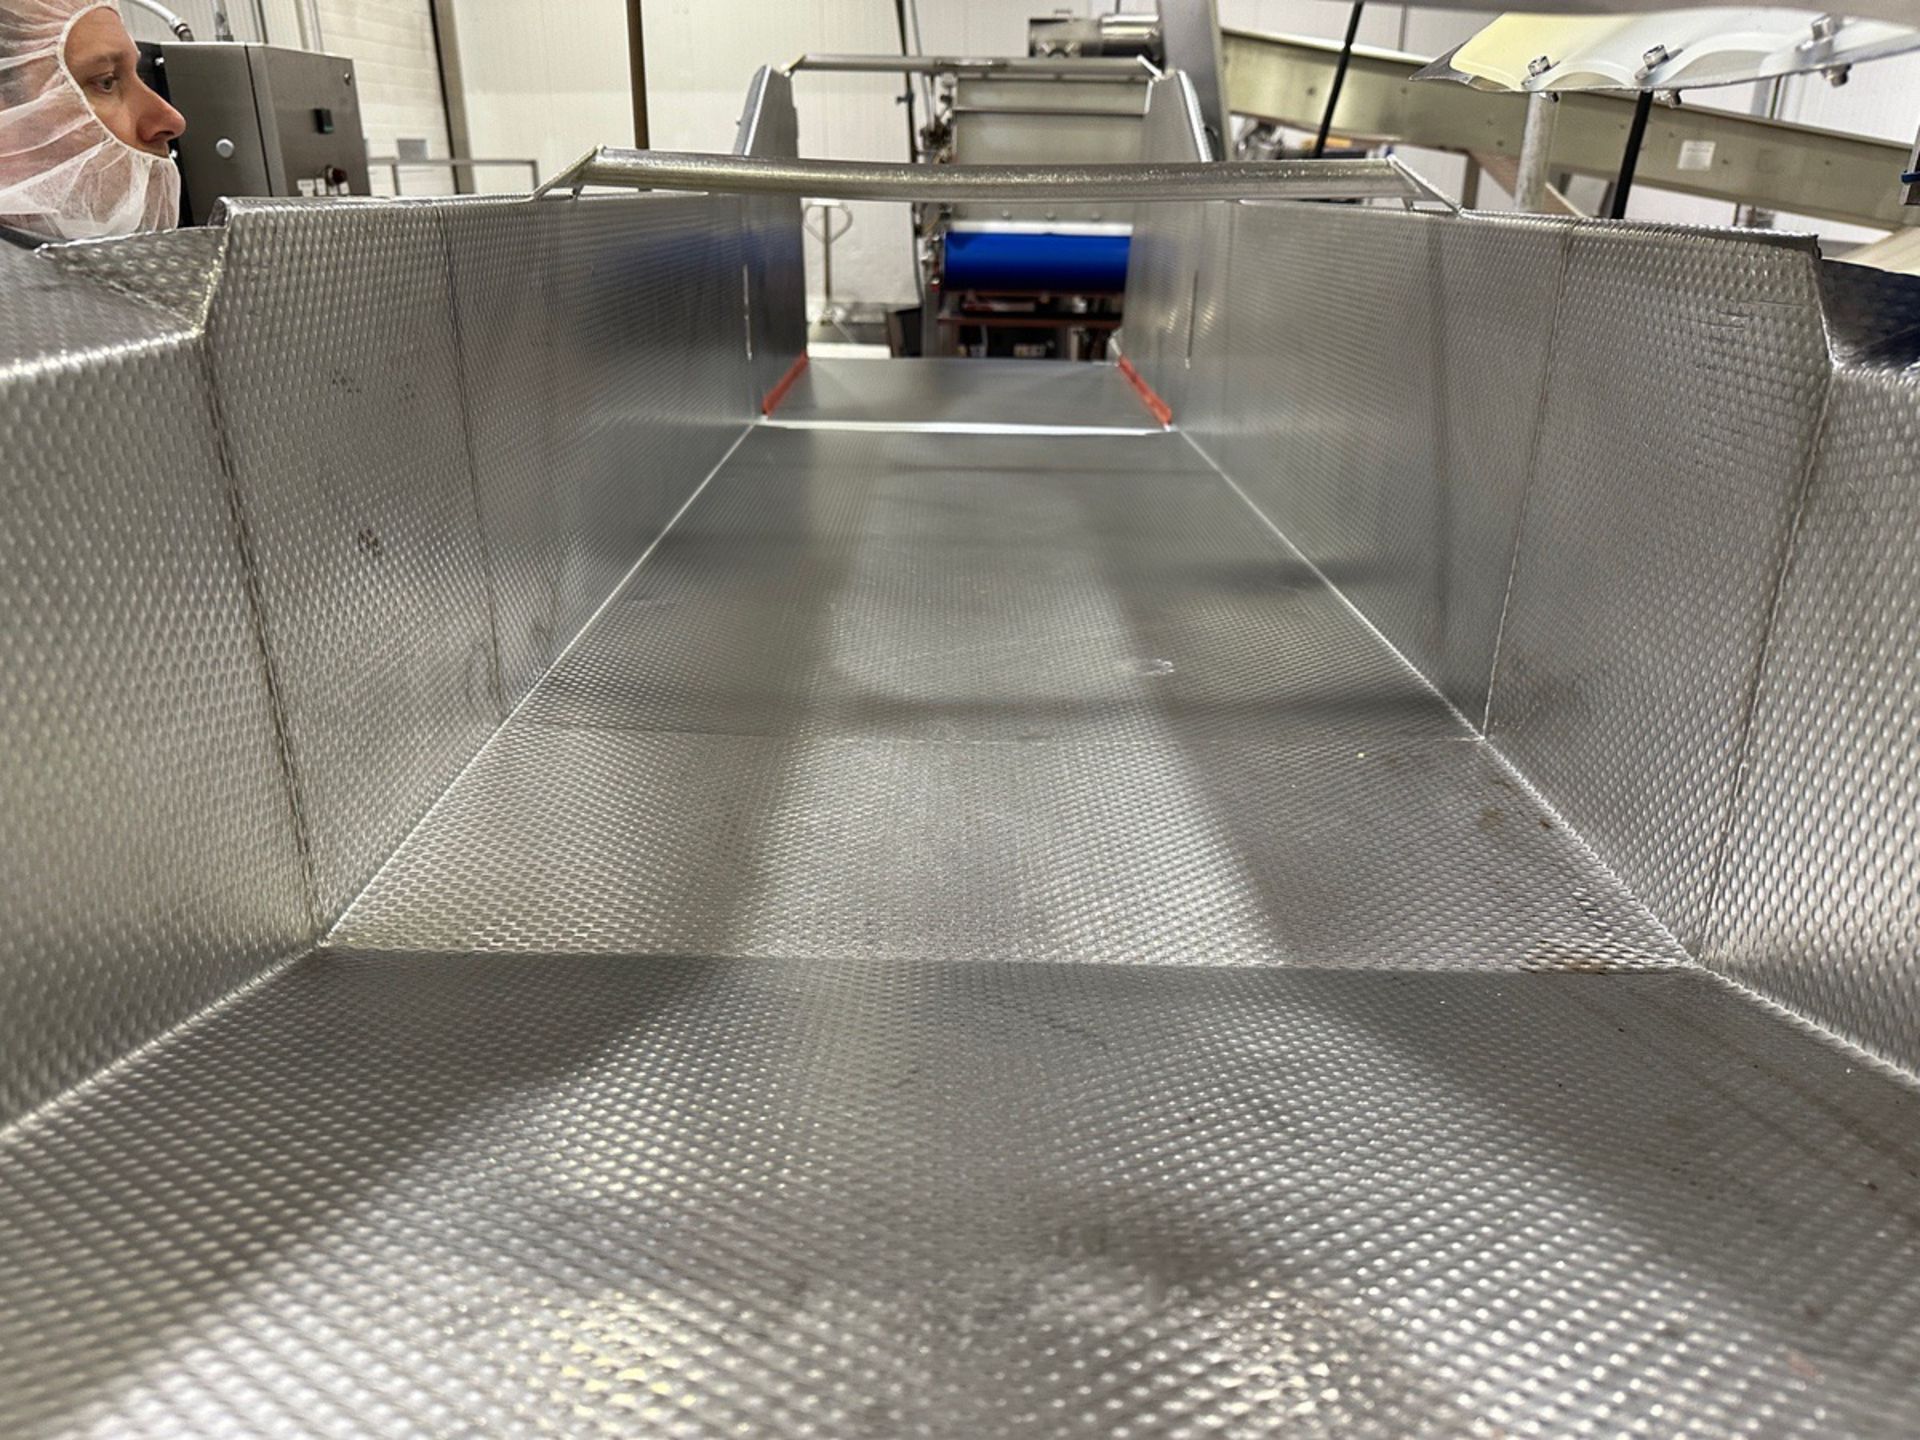 FastBack Dimple Pan Vibratory Conveyor, 24" Width x 9' OA Length | Rig Fee $300 - Image 2 of 3